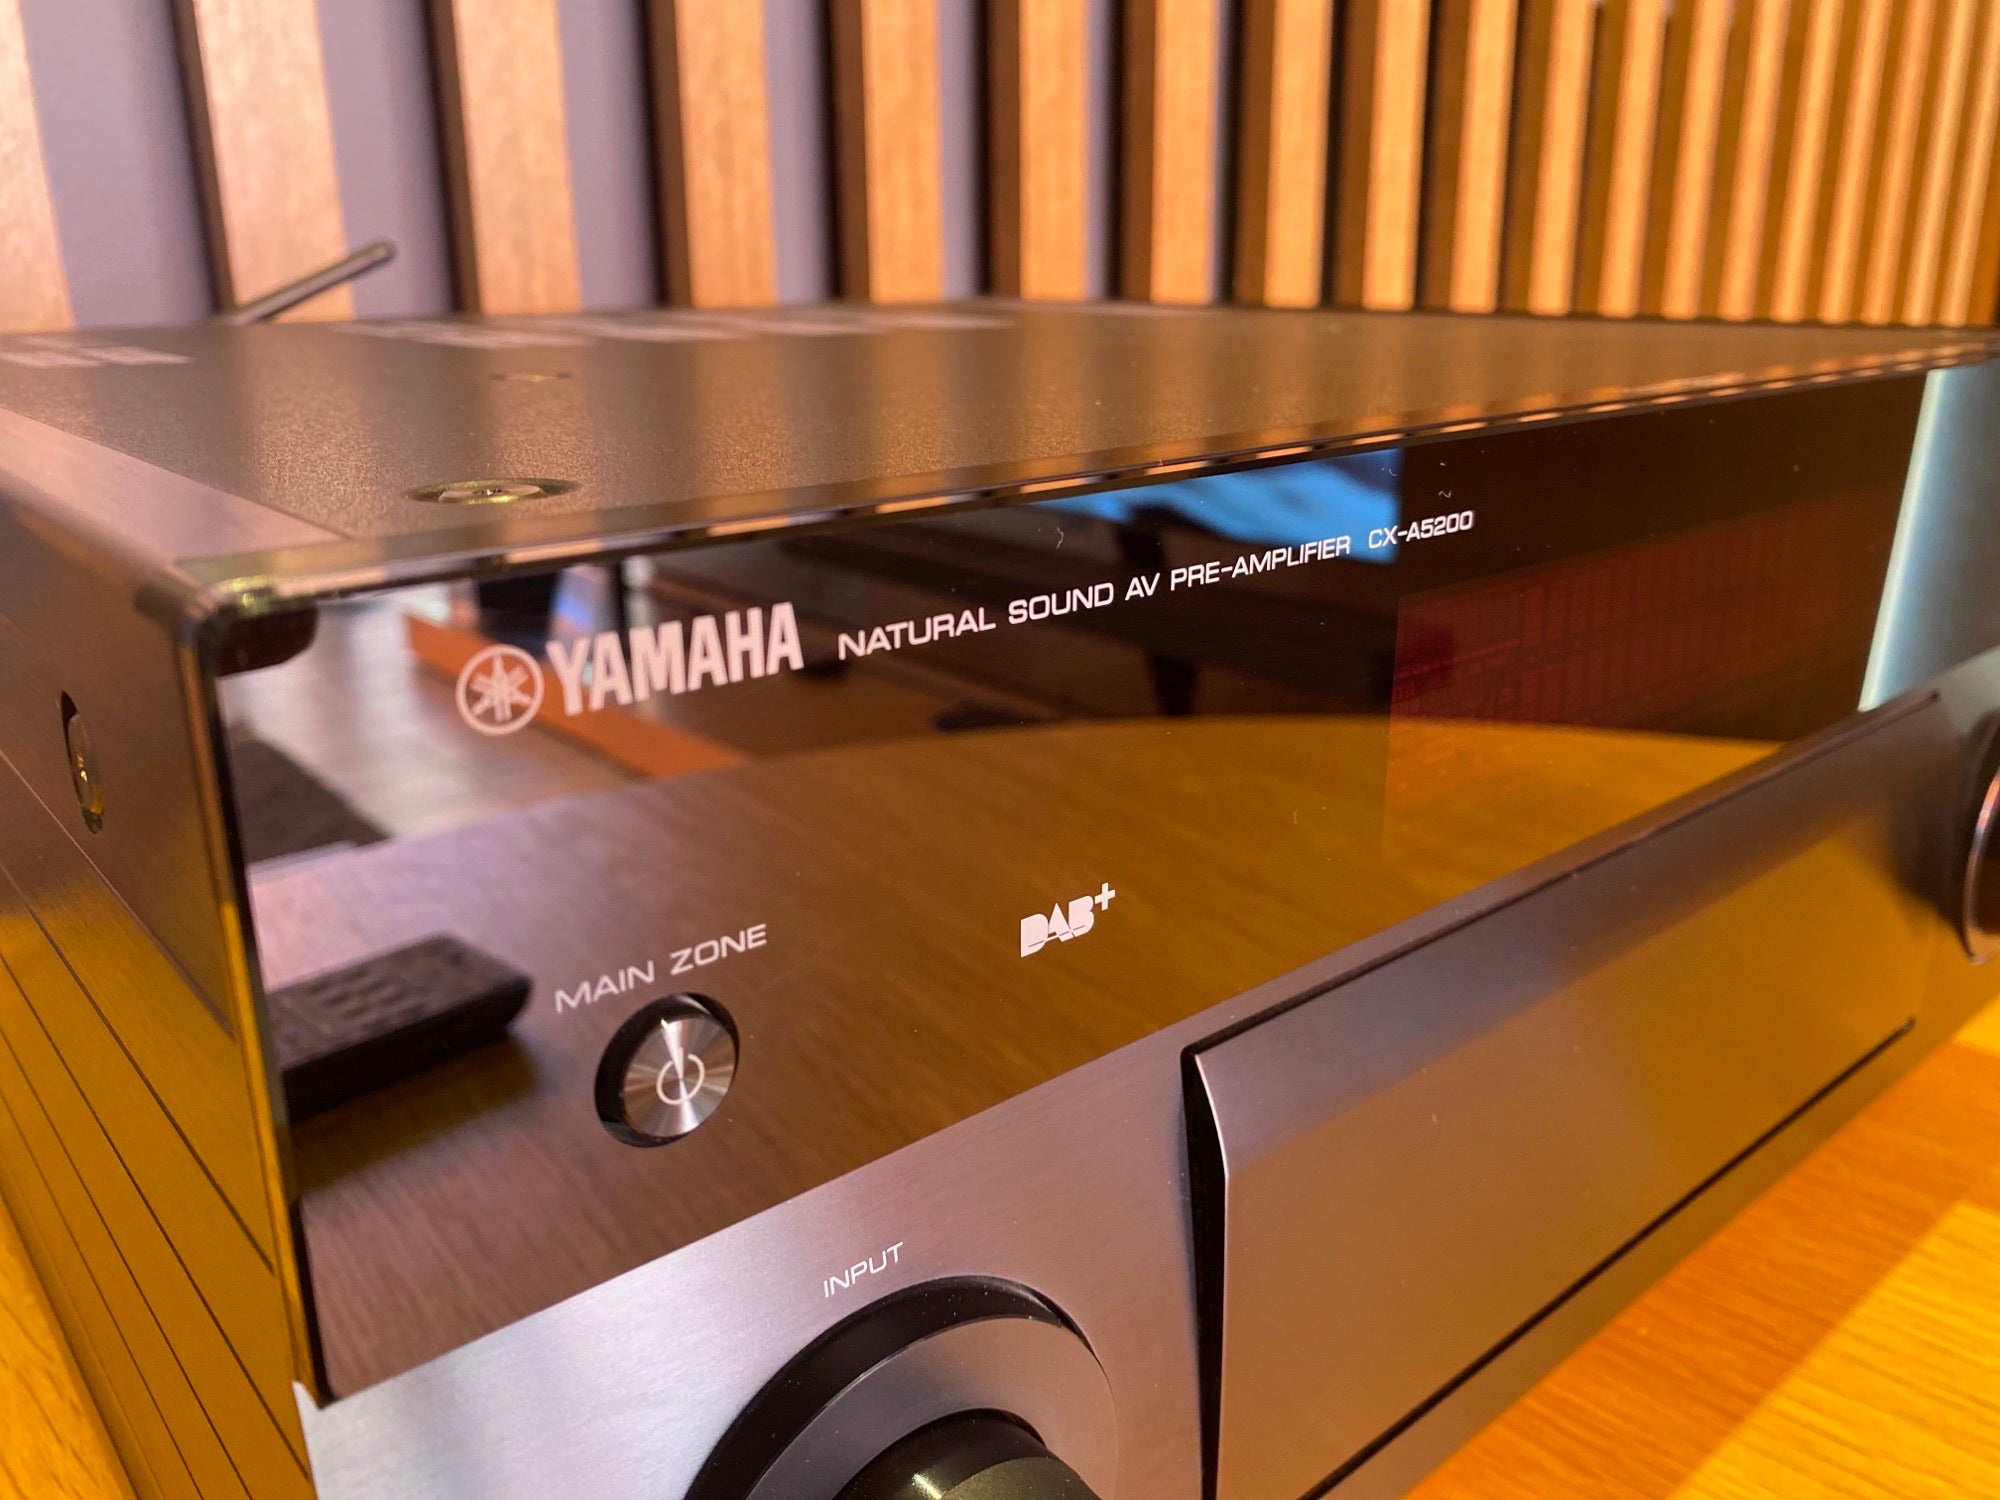 Yamaha CX-A5200 AVANTAGE 11.2 AV Processor 4K- As Traded